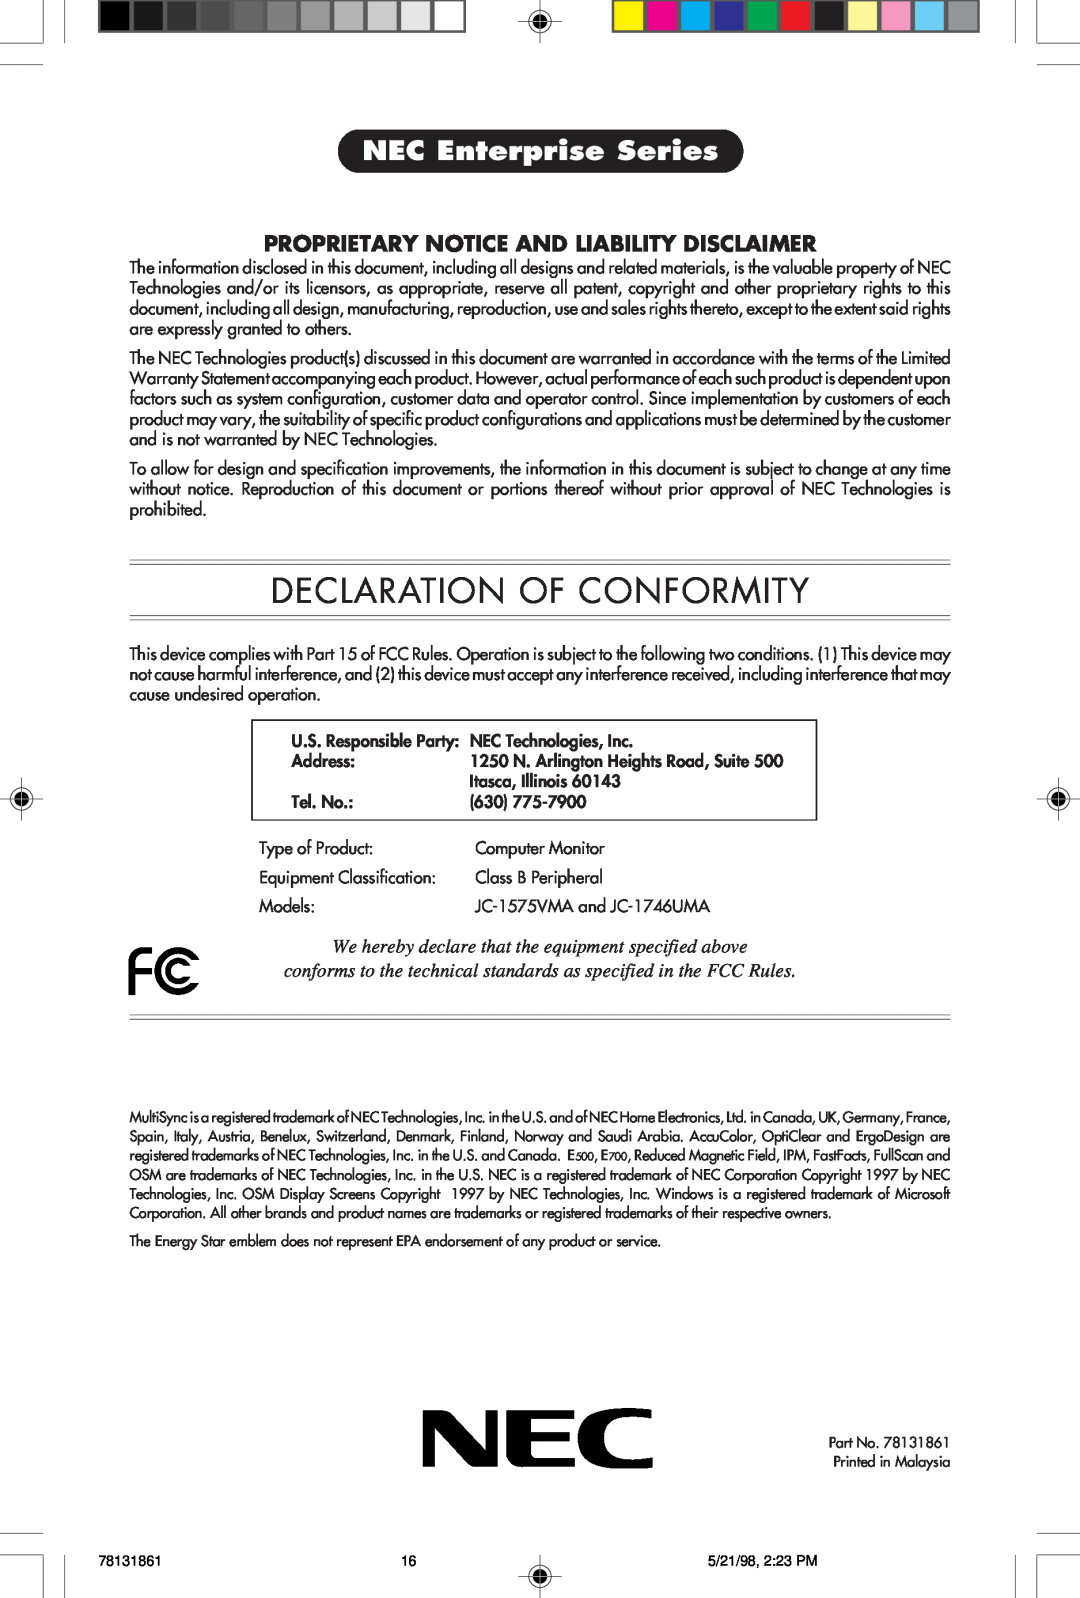 NEC E700, E500 user manual Declaration Of Conformity, NEC Enterprise Series, Proprietary Notice And Liability Disclaimer 